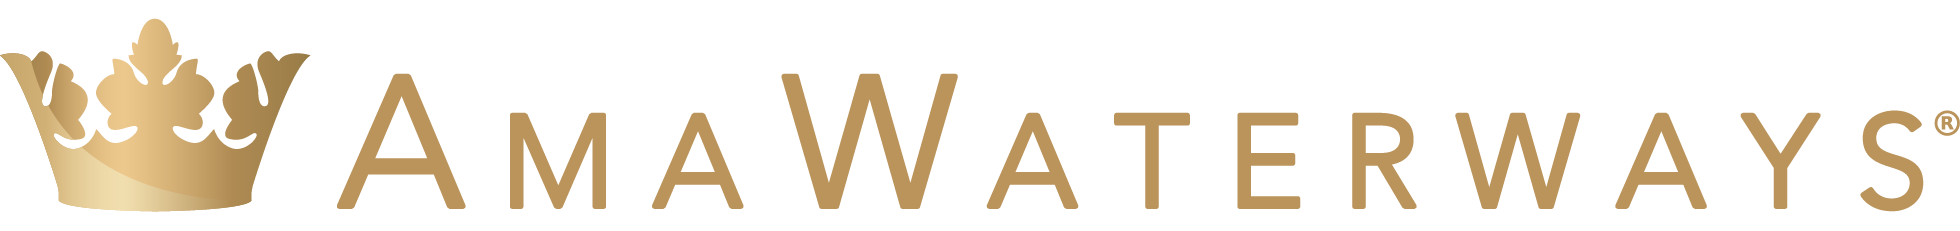 Amawaterways logo